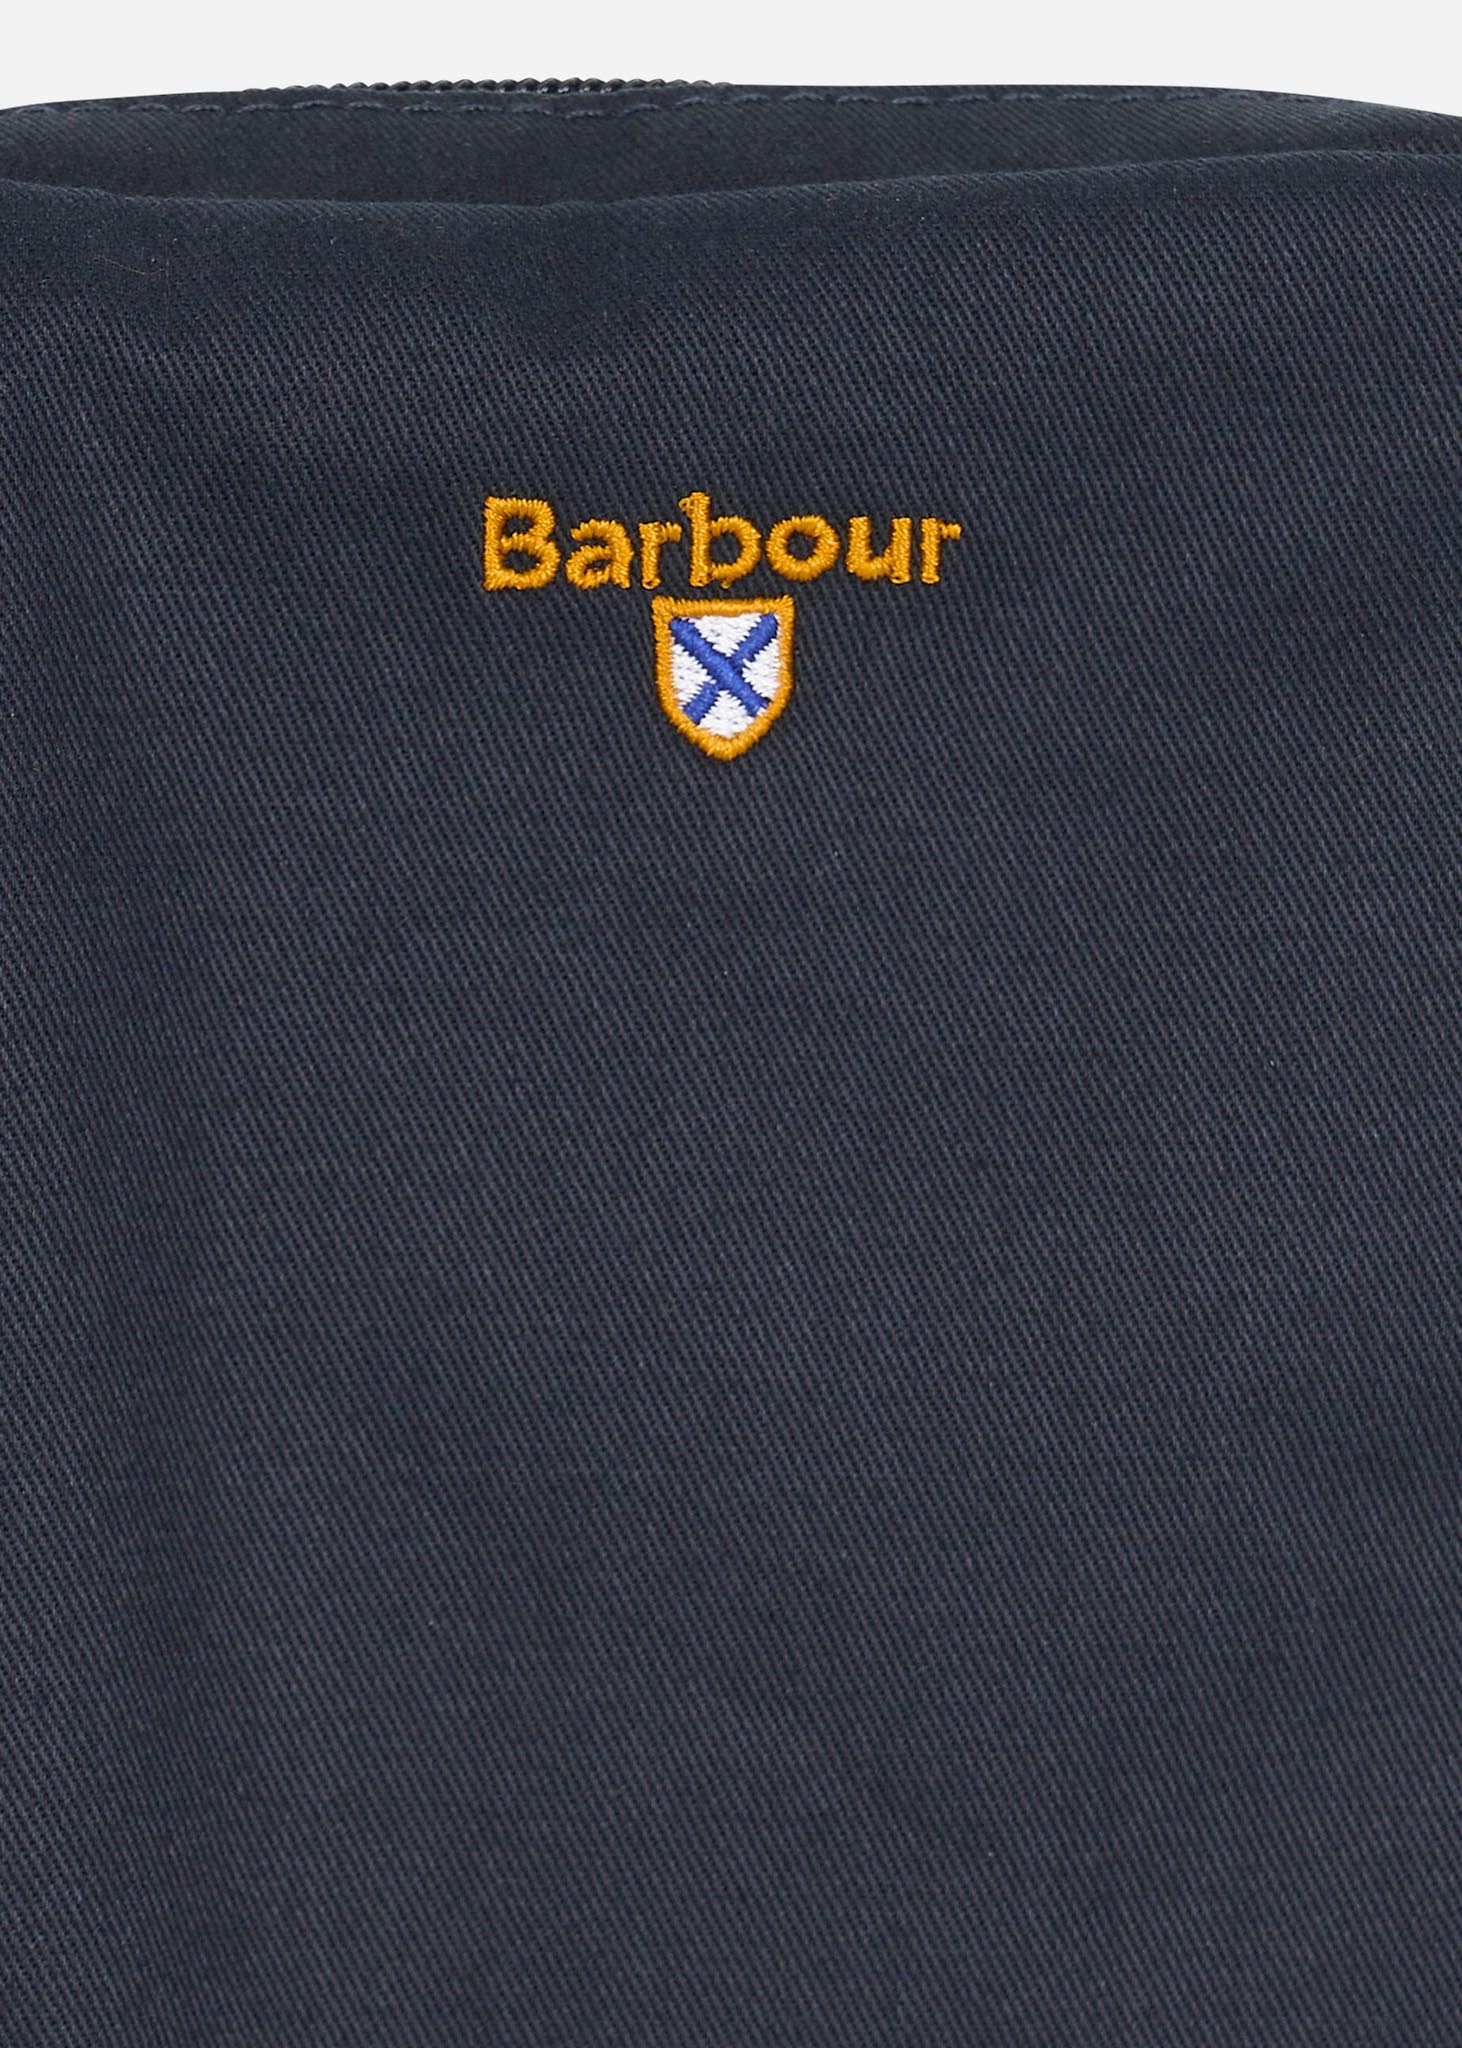 barbour flight bag 